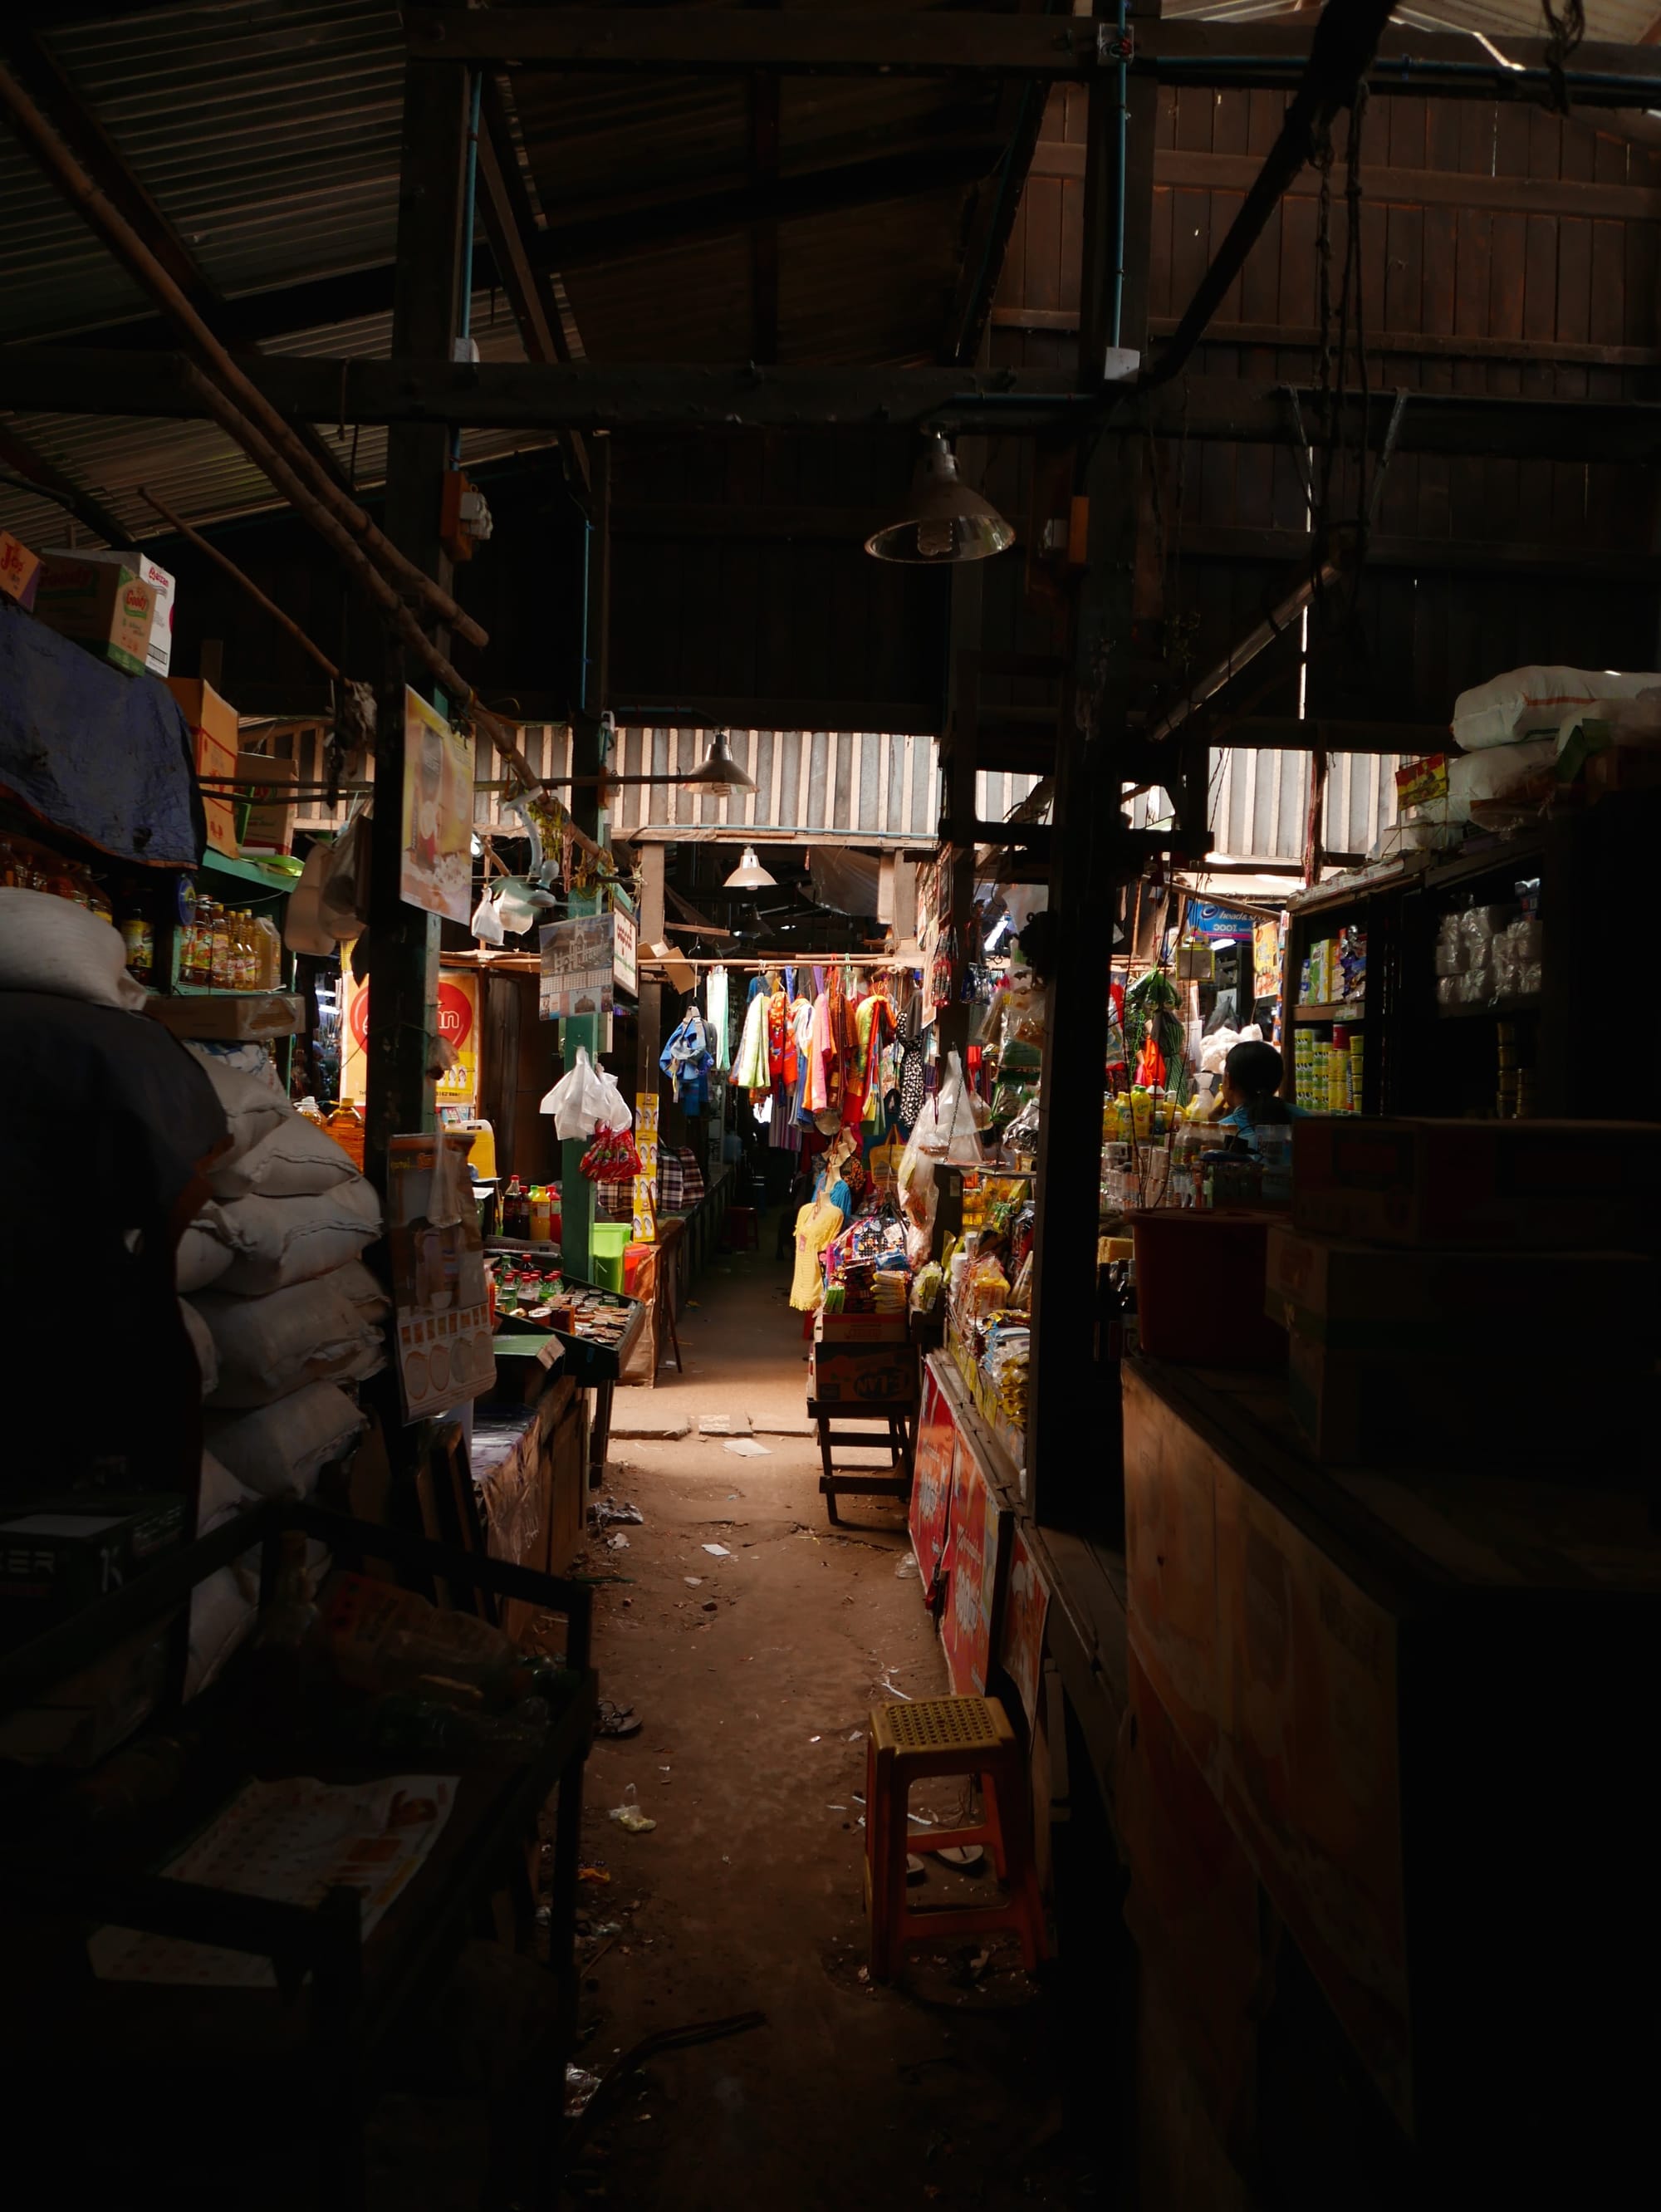 Photo by Author — Merchant Street Market, Yangon (Rangoon), Myanmar (Burma)